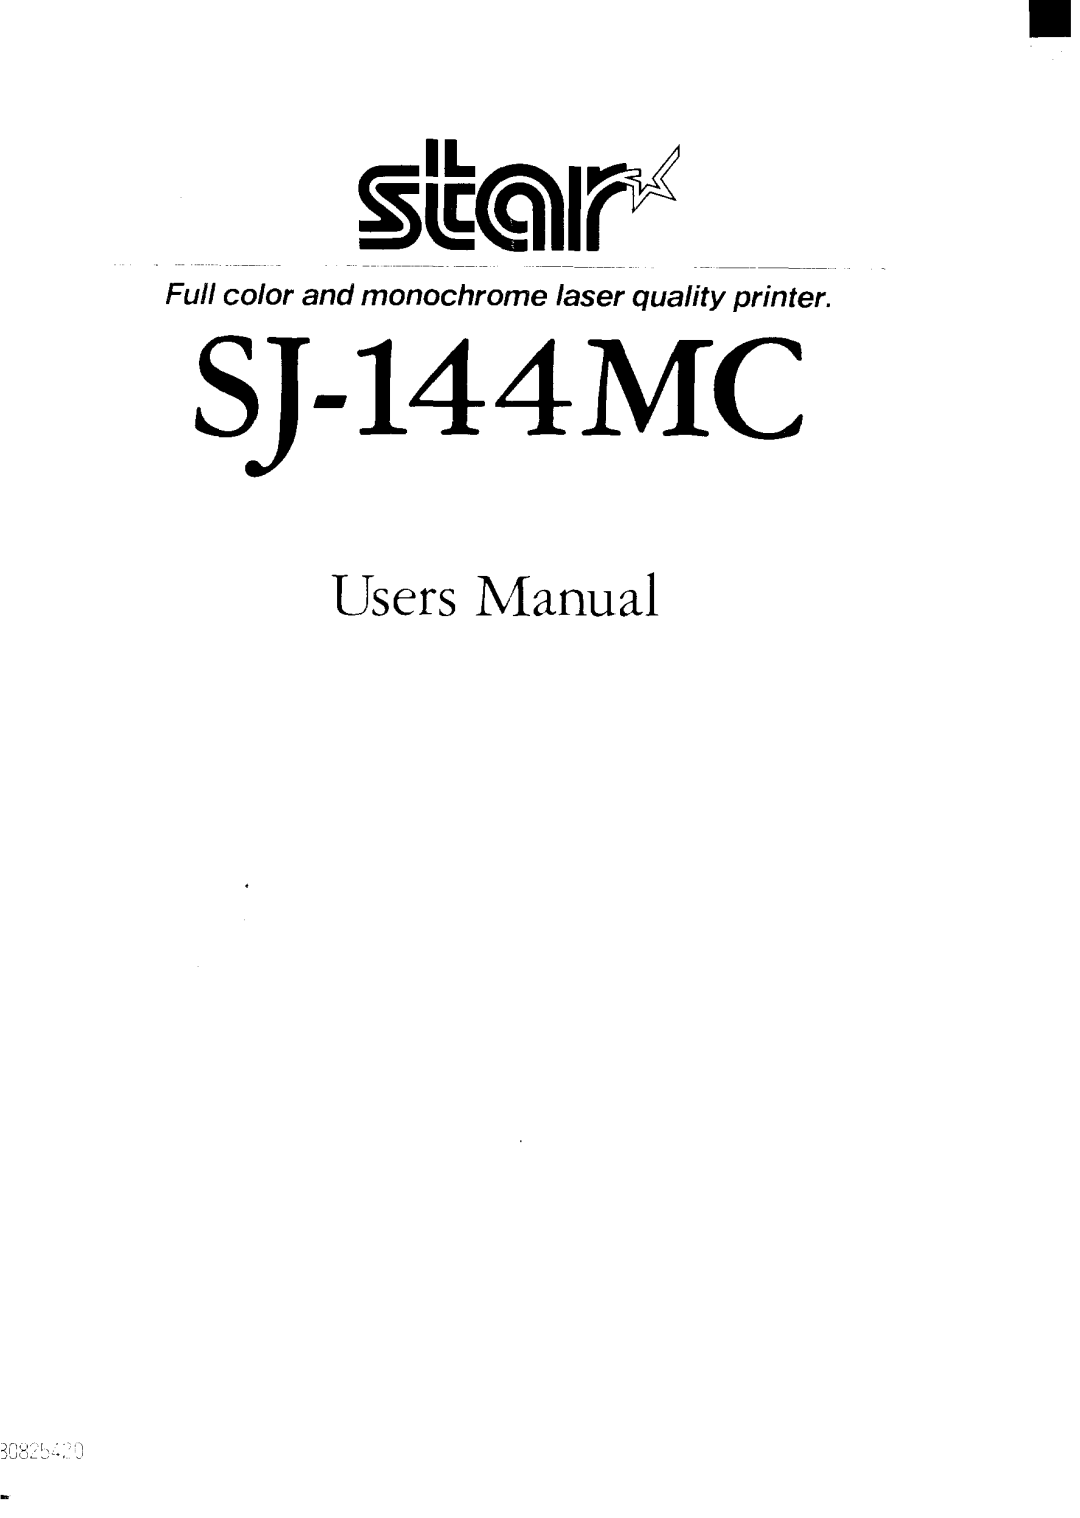 Star Micronics SJ-144MC user manual UsersManual, Full color and monochrome laser quality printer 